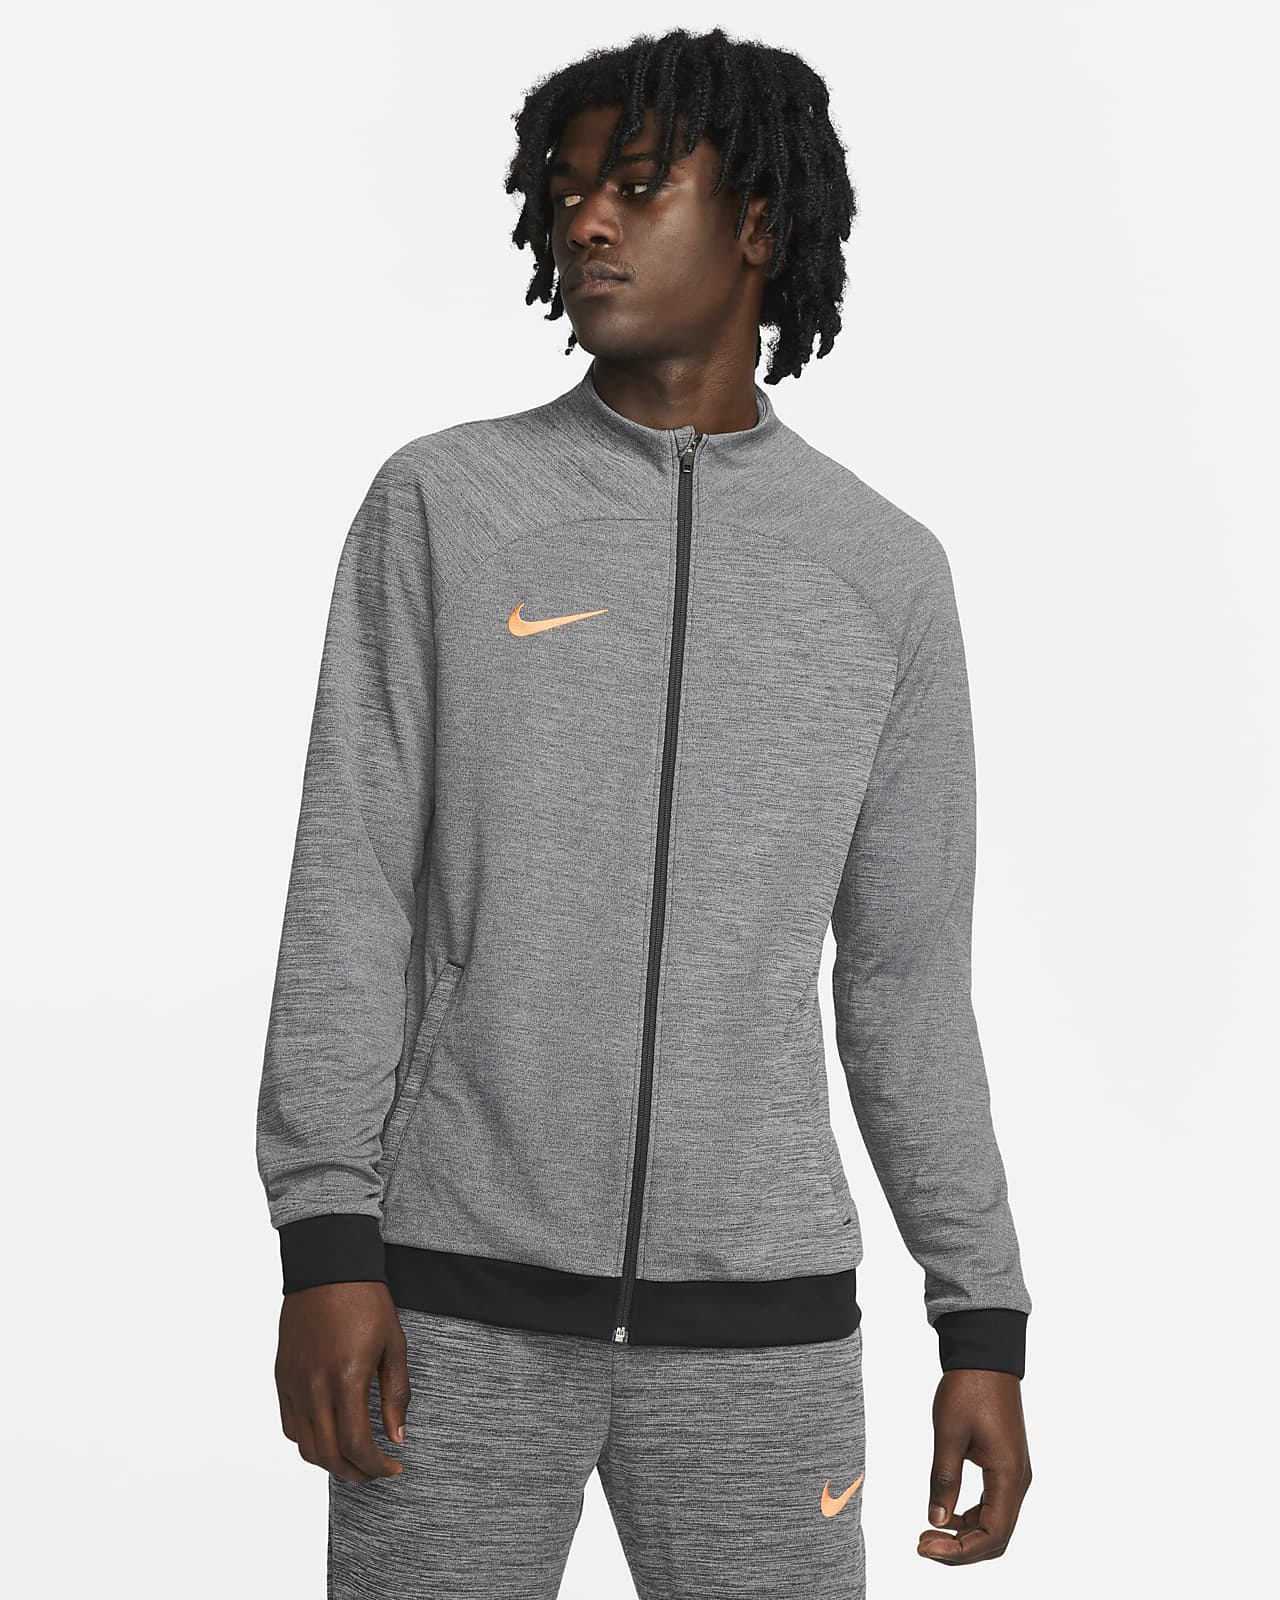 Nike Dri-FIT Academy Men's Football Track Jacket